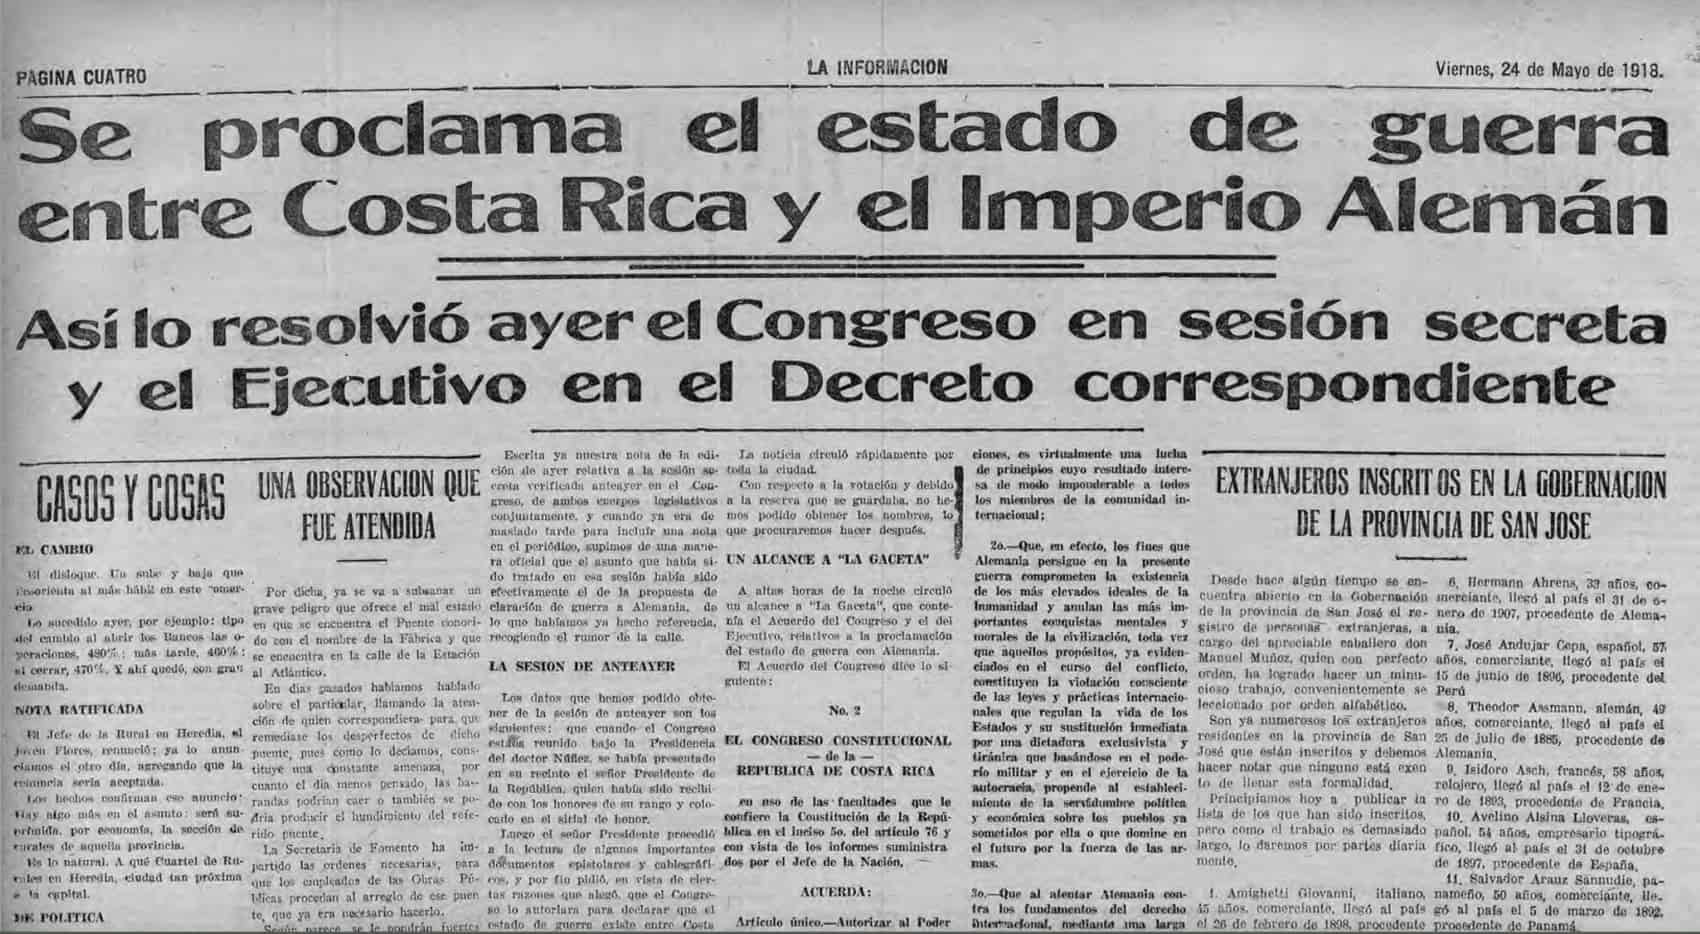 Costa Rica World War 1: Declaration of war against the German Empire.